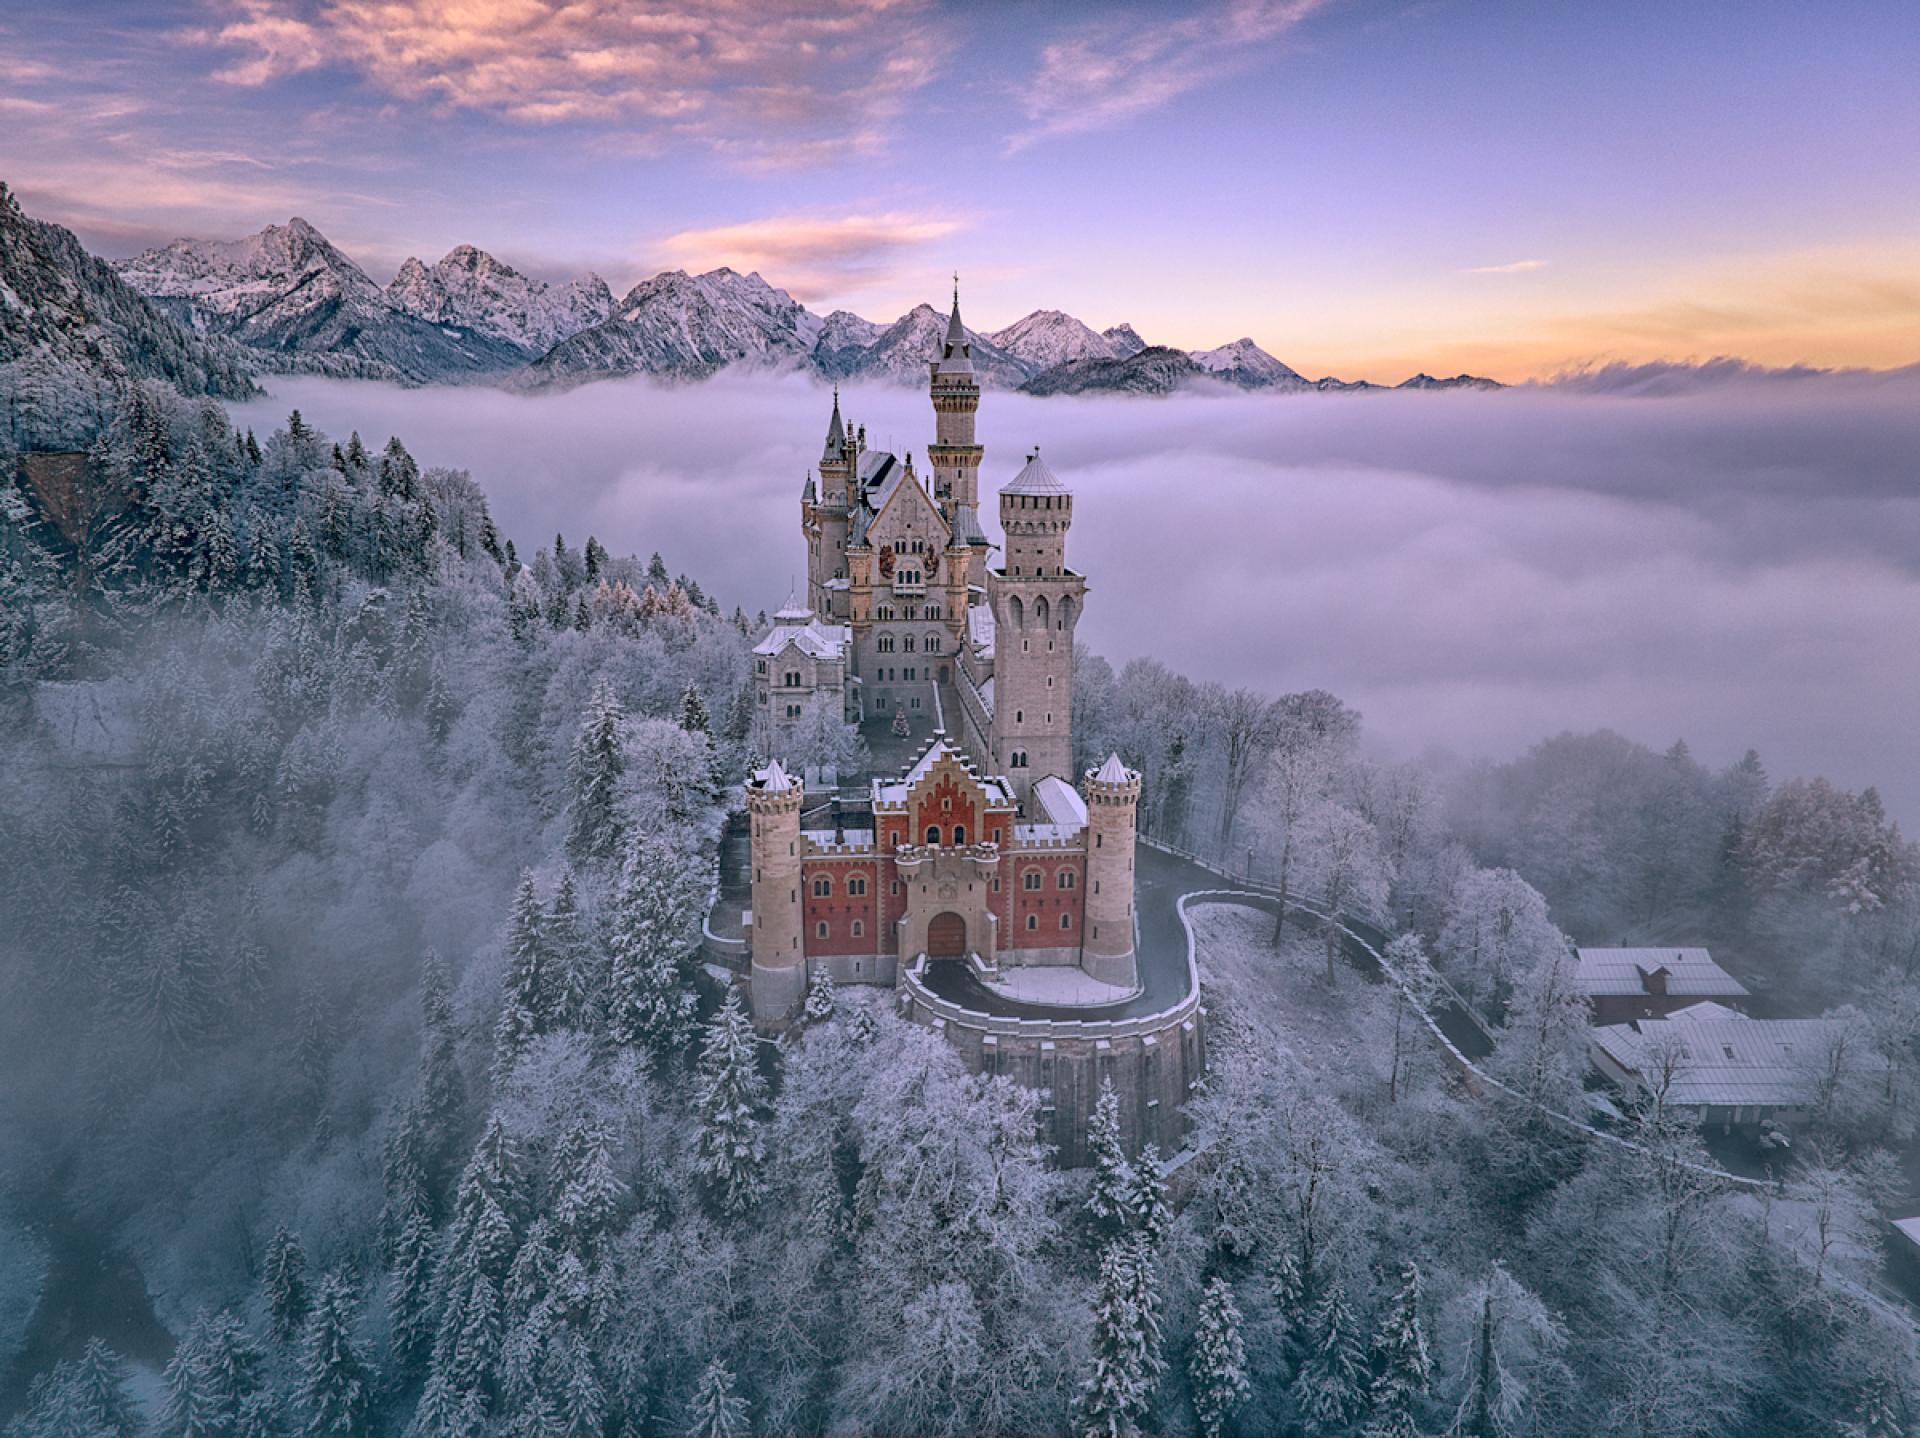 London Photography Awards Winner - snow and fog at Neuschwanstein castle